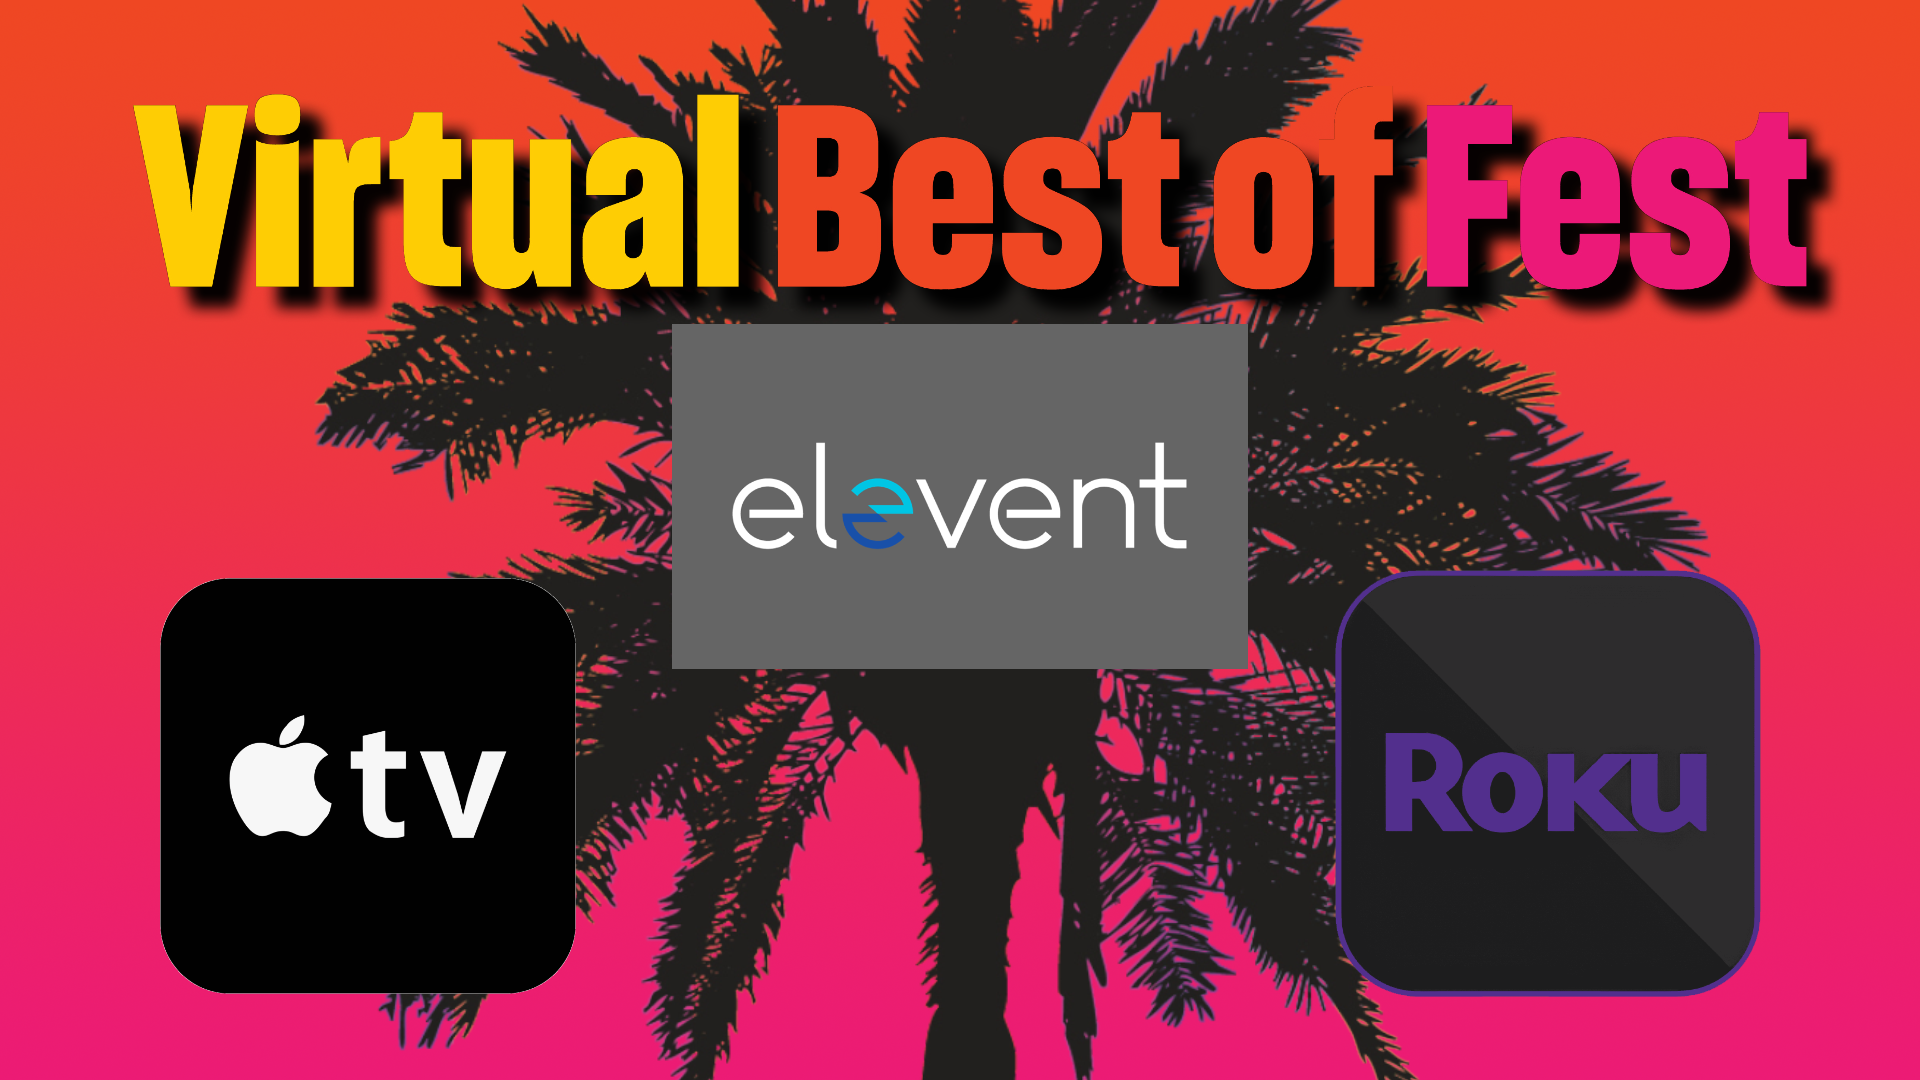 Virtual Best of Fest